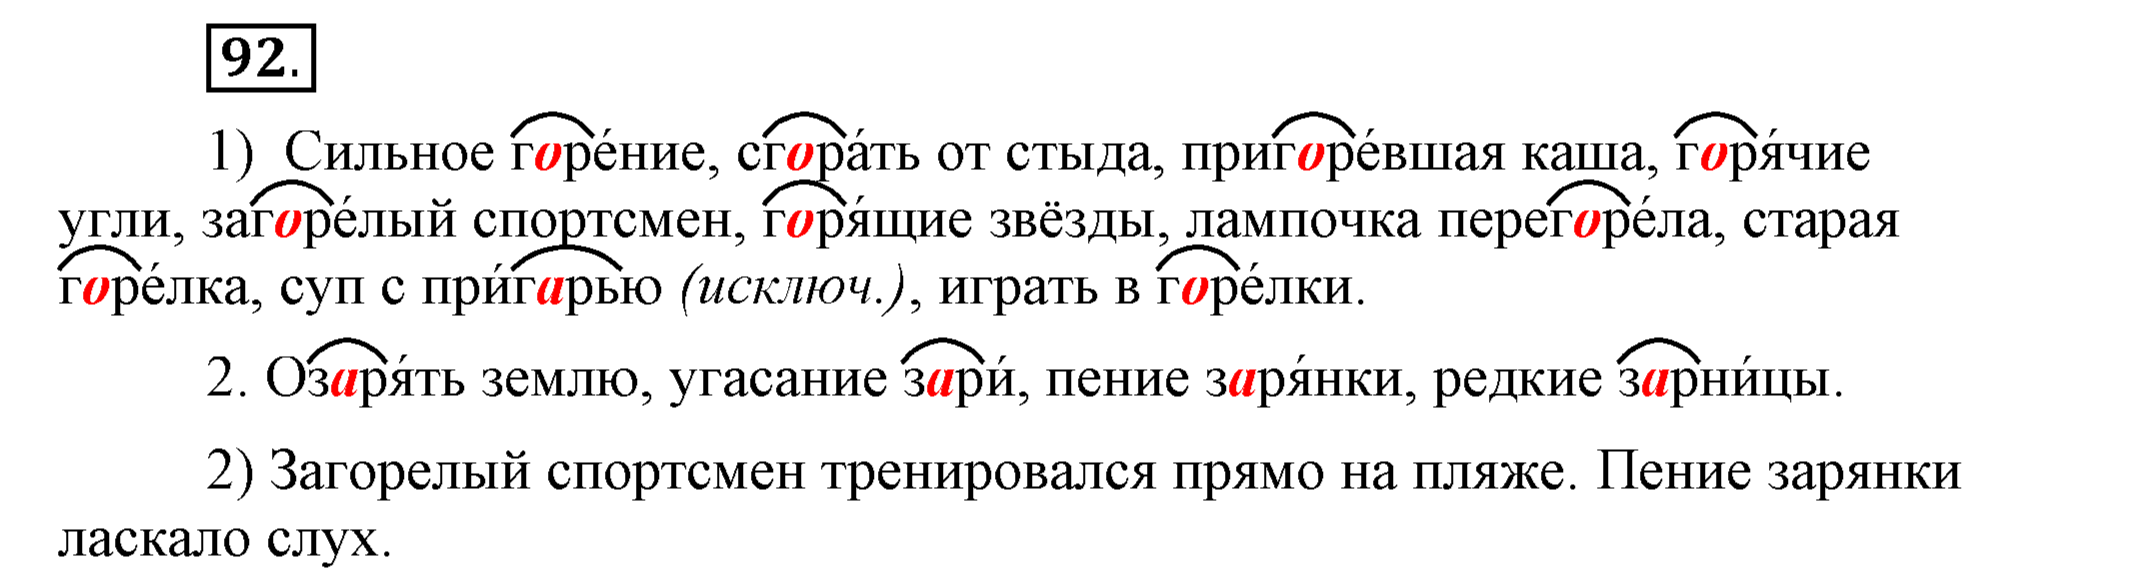 Тесты корень слова 2 класс. Русский язык 5 класс шмелёва 2 часть. Русский язык 5 класс учебник 2 часть шмелёв.